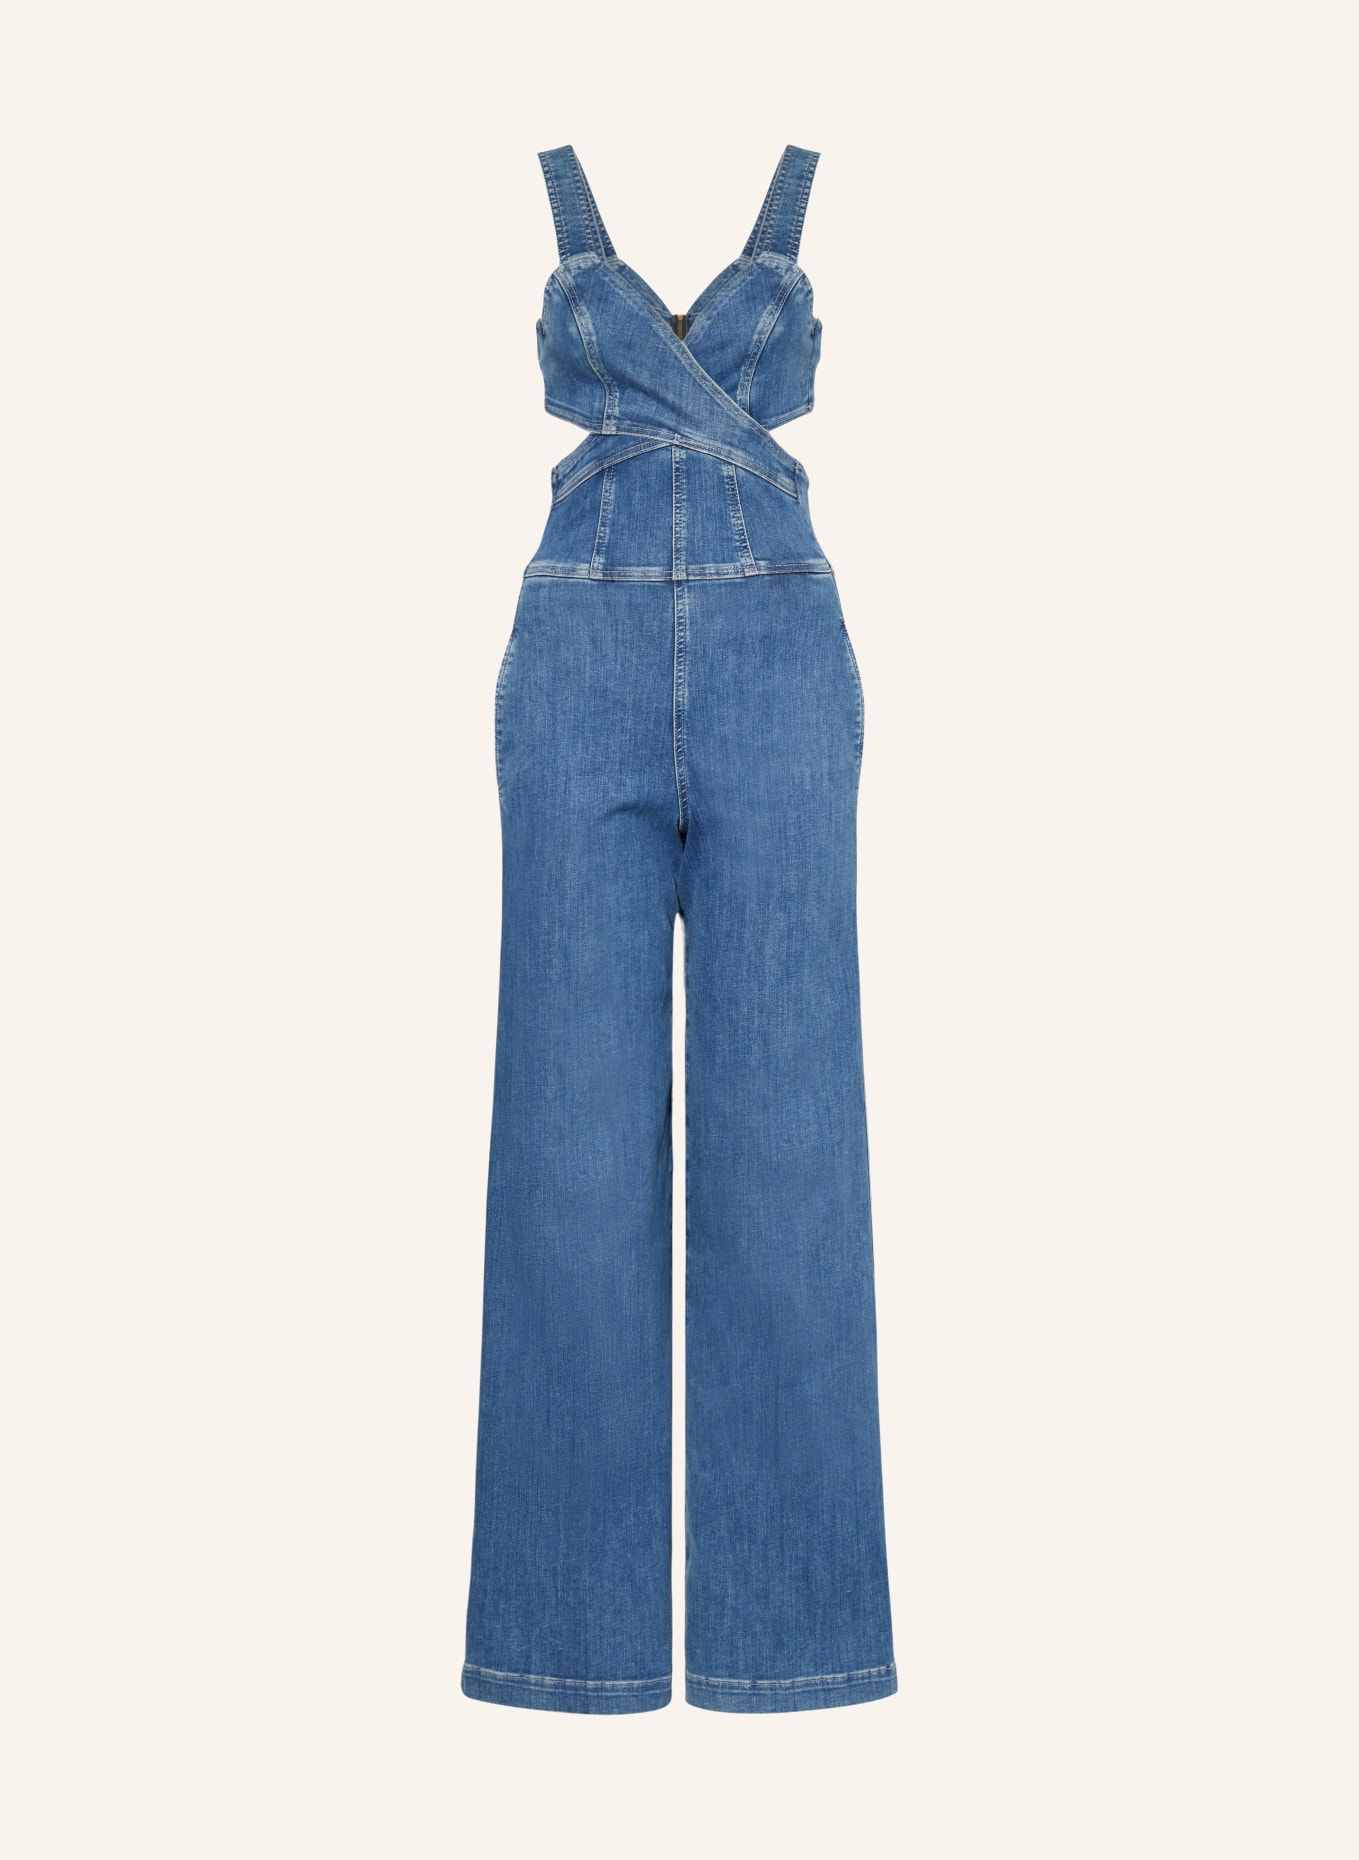 LIU JO Jeans-Jumpsuit mit Cut-outs, Farbe: 78564 Den.Blue princess el (Bild 1)